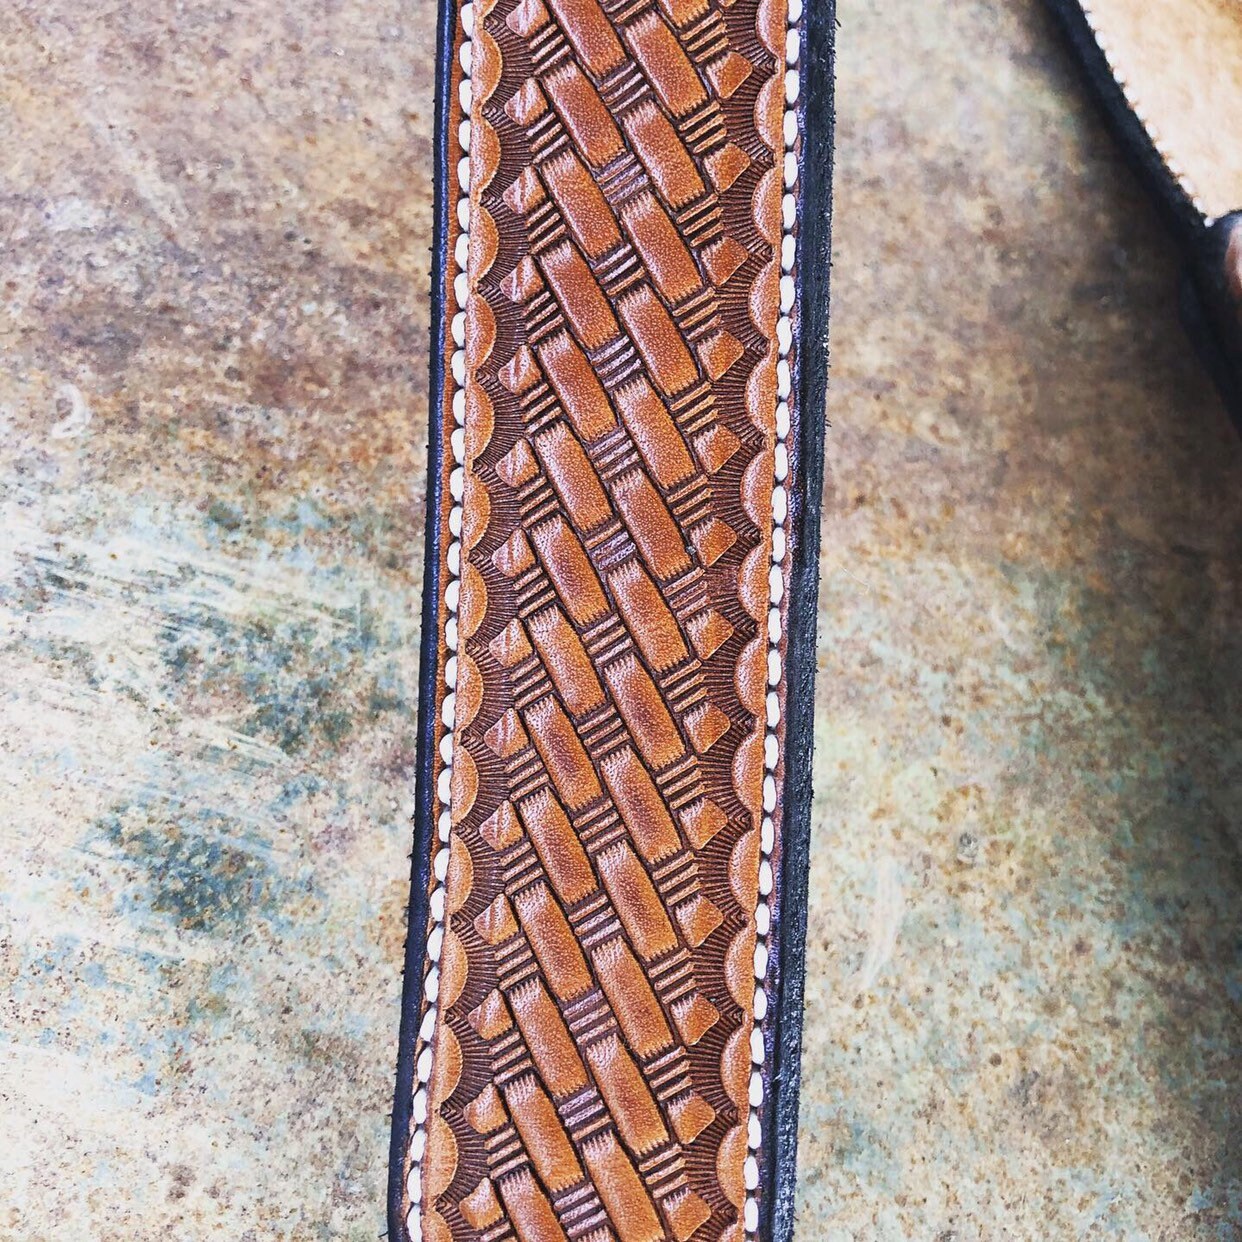 Сognac leather sword belt, Handmade leather Suspenders, leather  accessories, men